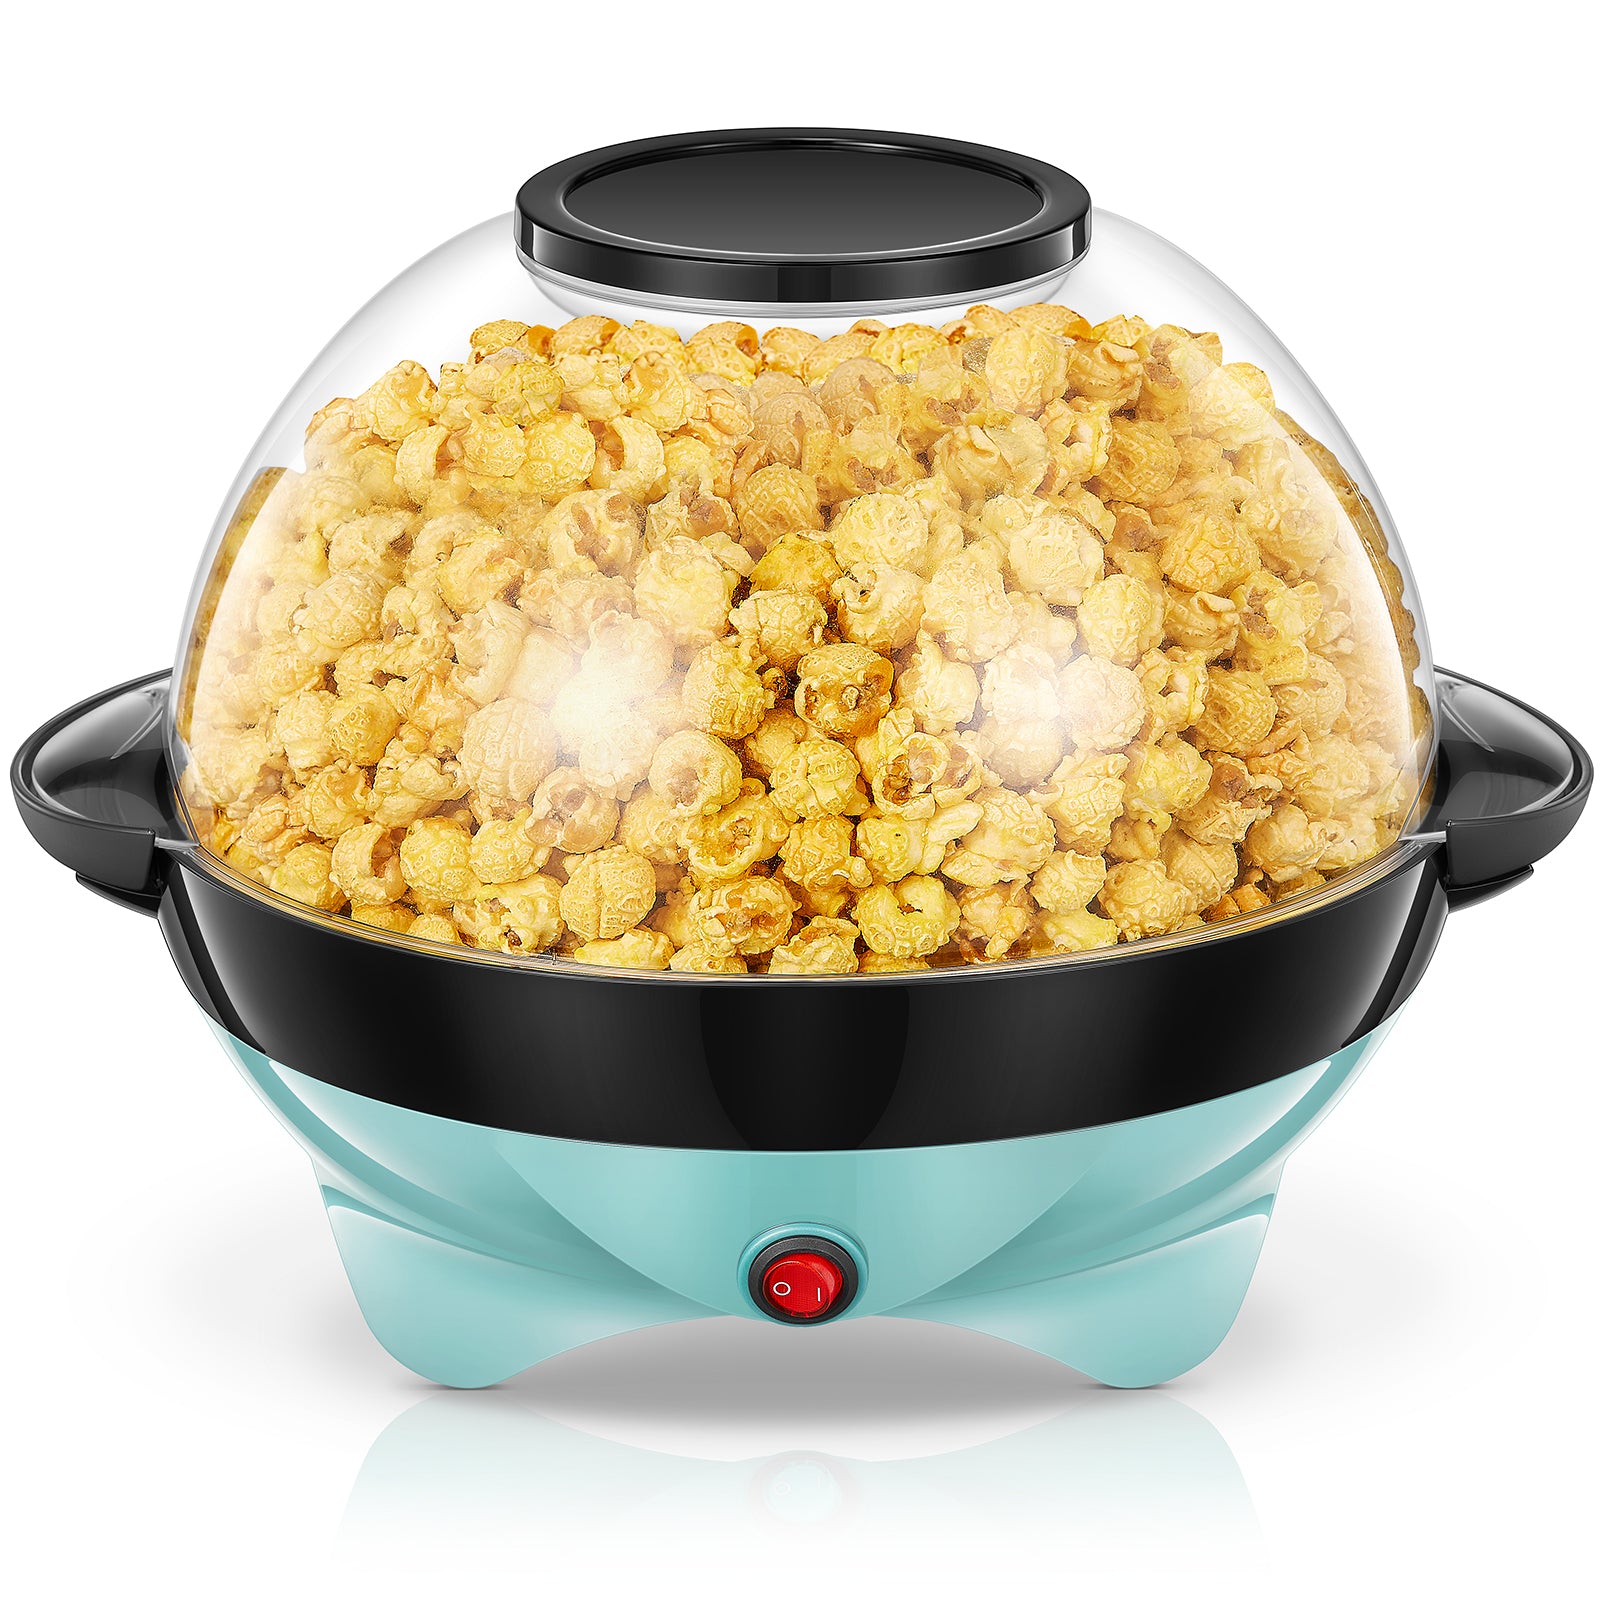 FOHER Popcorn Machine, 6 Quart/24 Cup 800W Fast Heat up Popcorn Popper Machine, Electric Hot Oil Butter Popcorn Maker with Stirring Rod, Nonstick Plate, Dishwasher Safe, Mode906